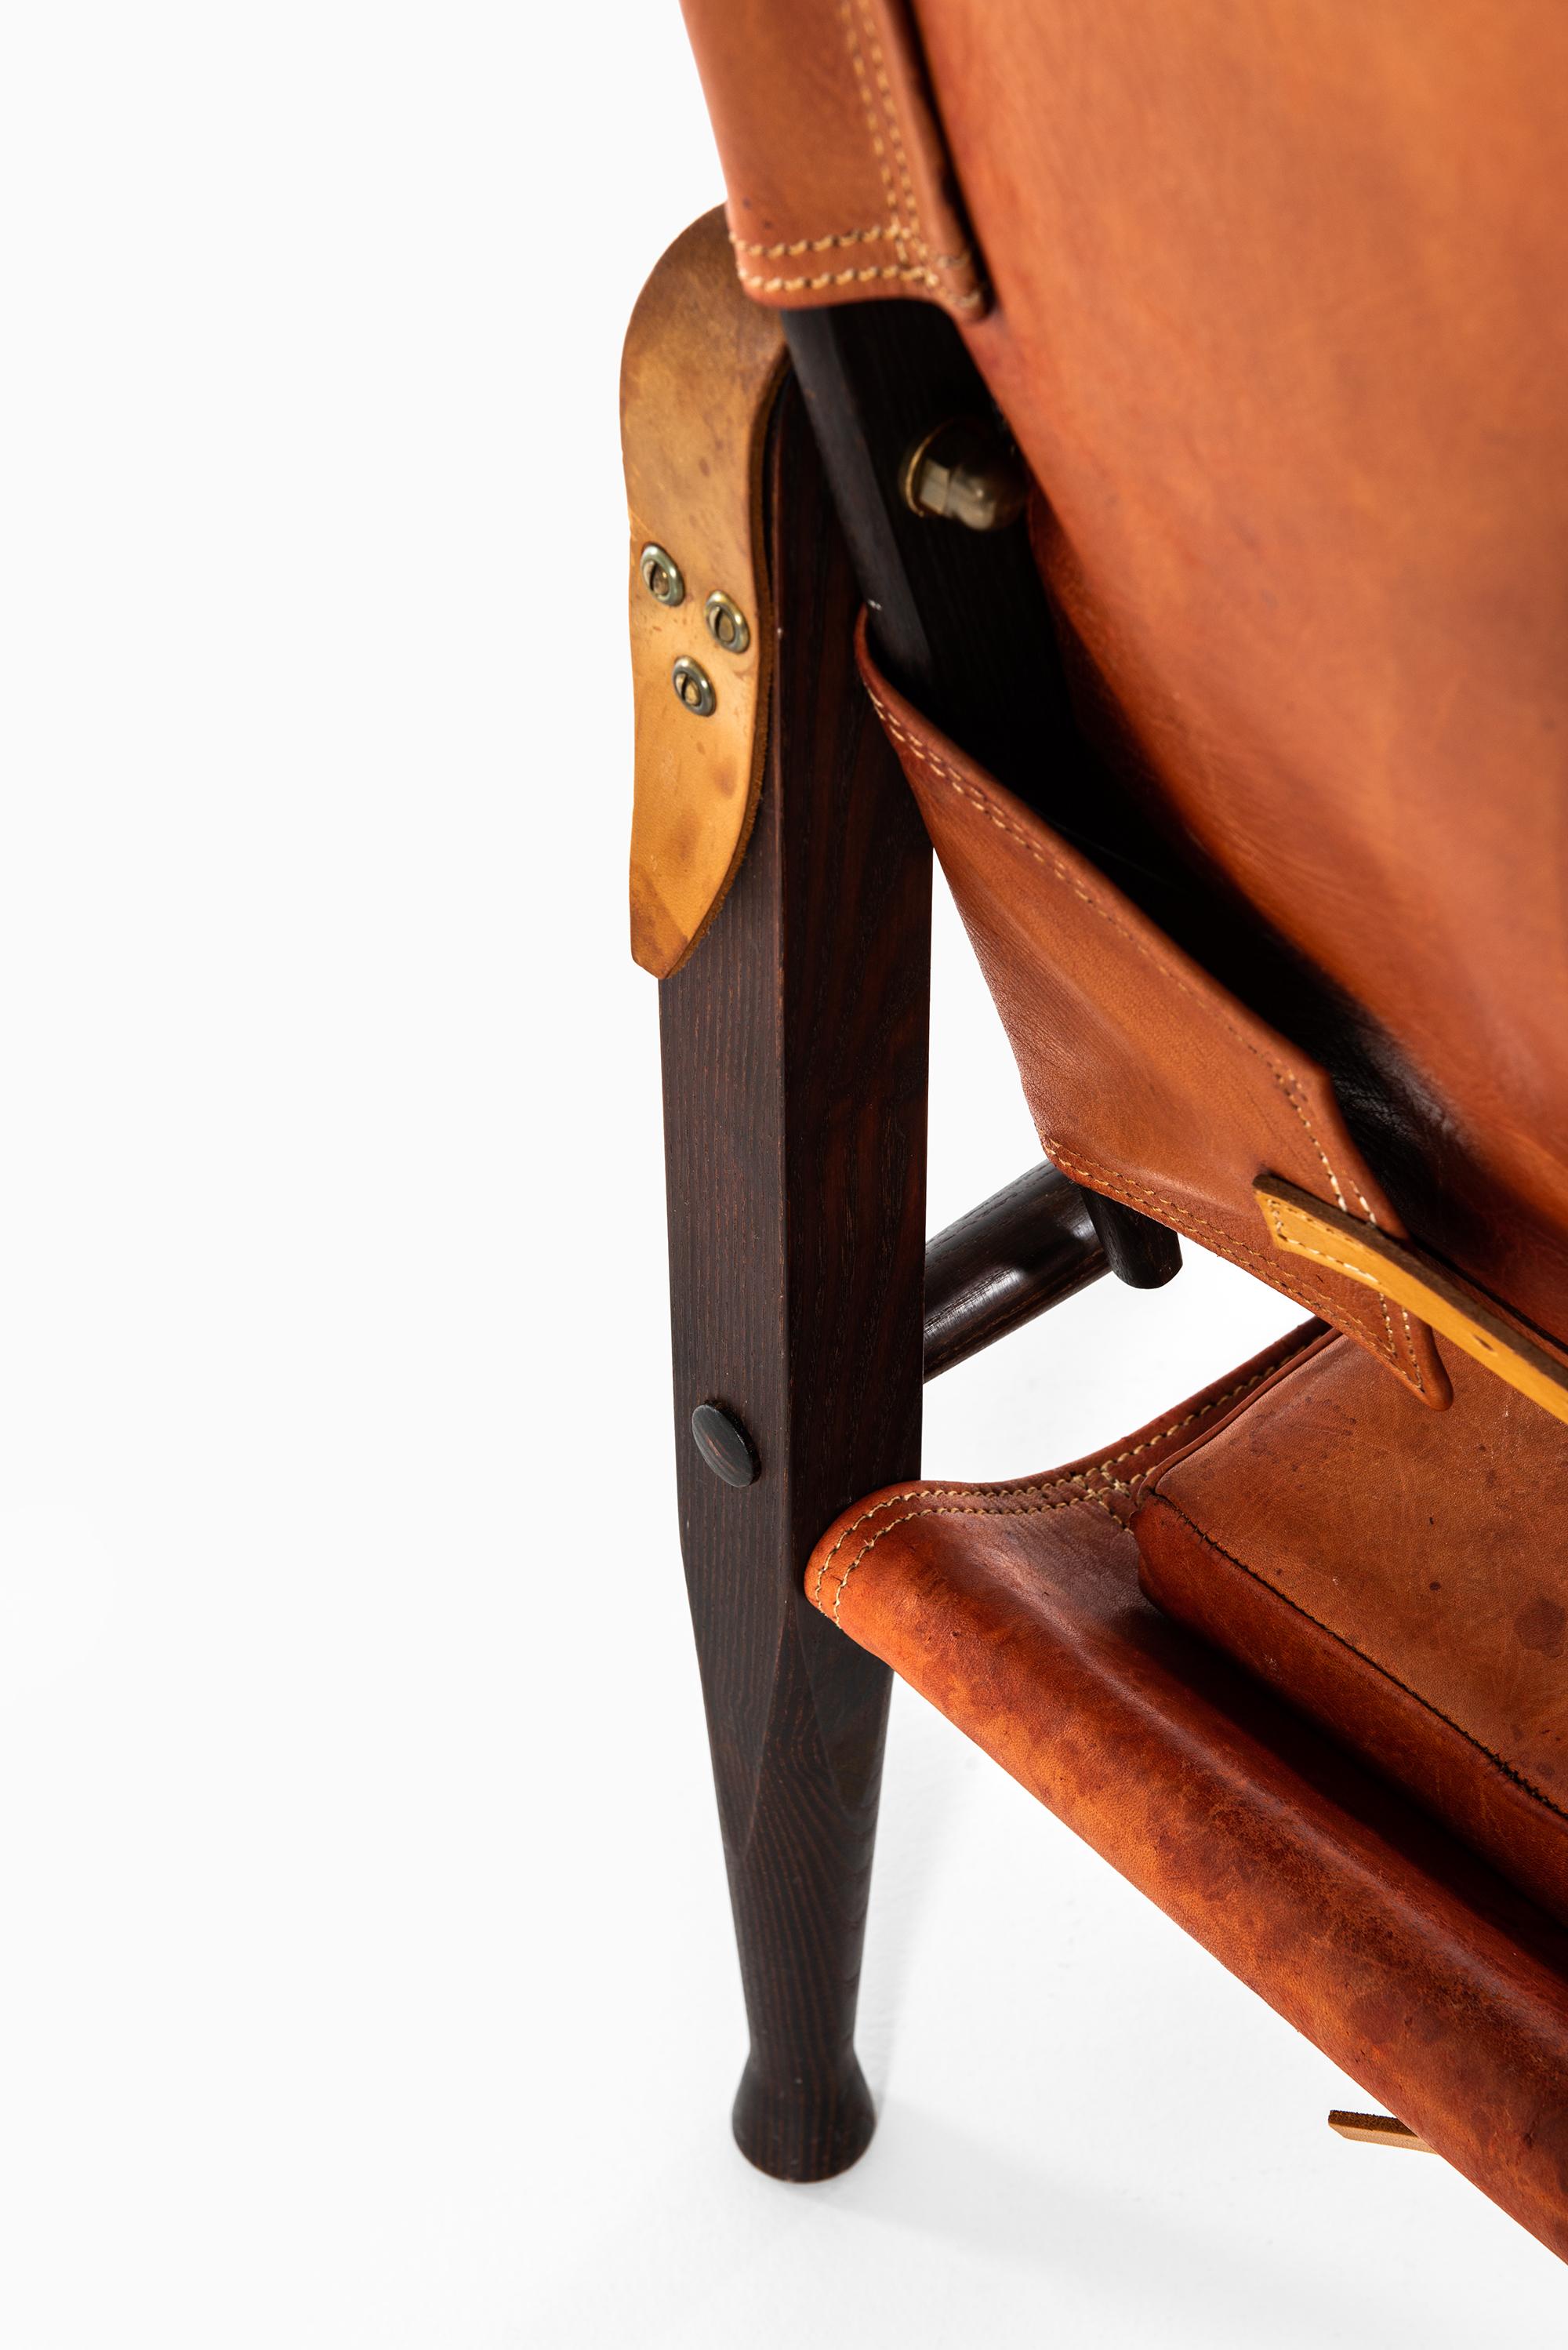 Brass Kaare Klint Safari Chairs Produced by Rud Rasmussen in Denmark